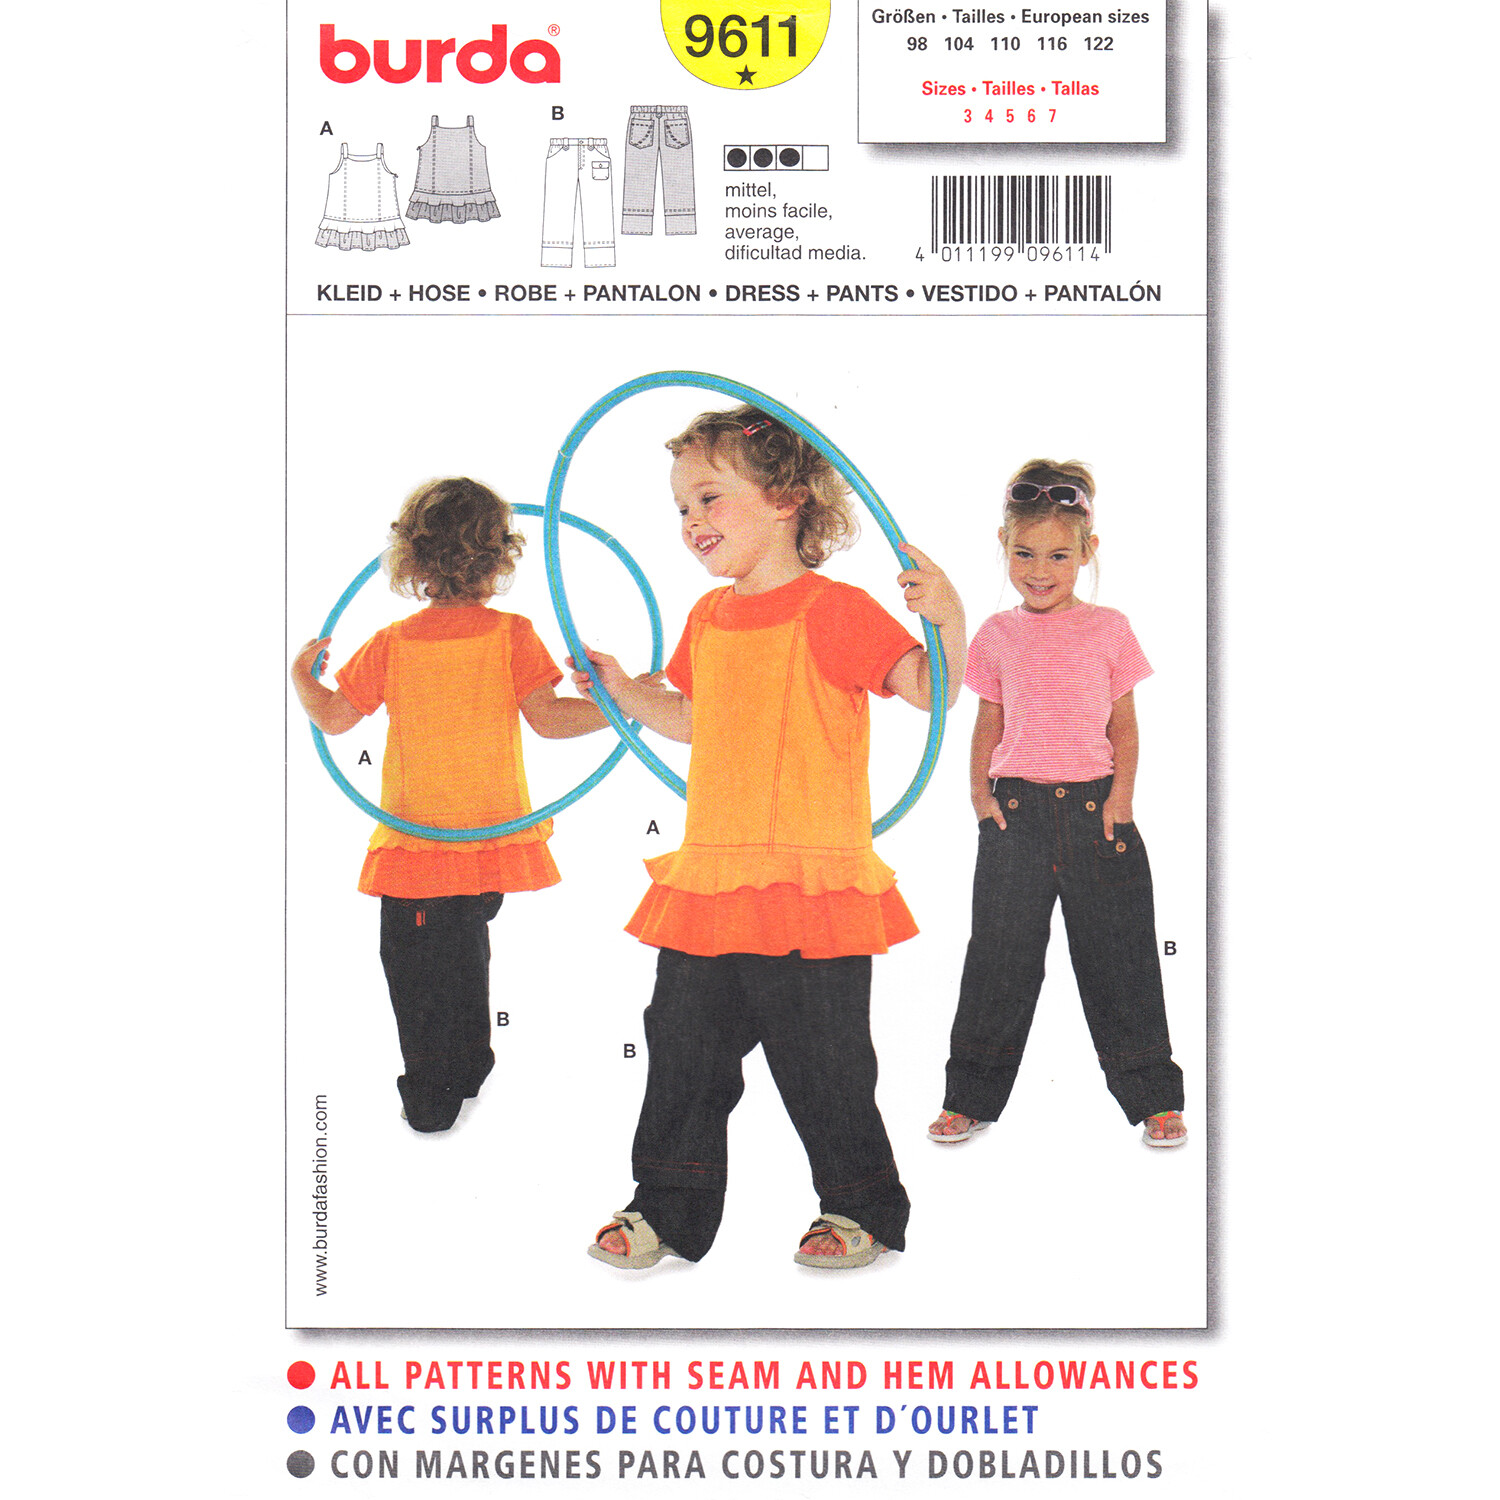 Burda 9611 pattern